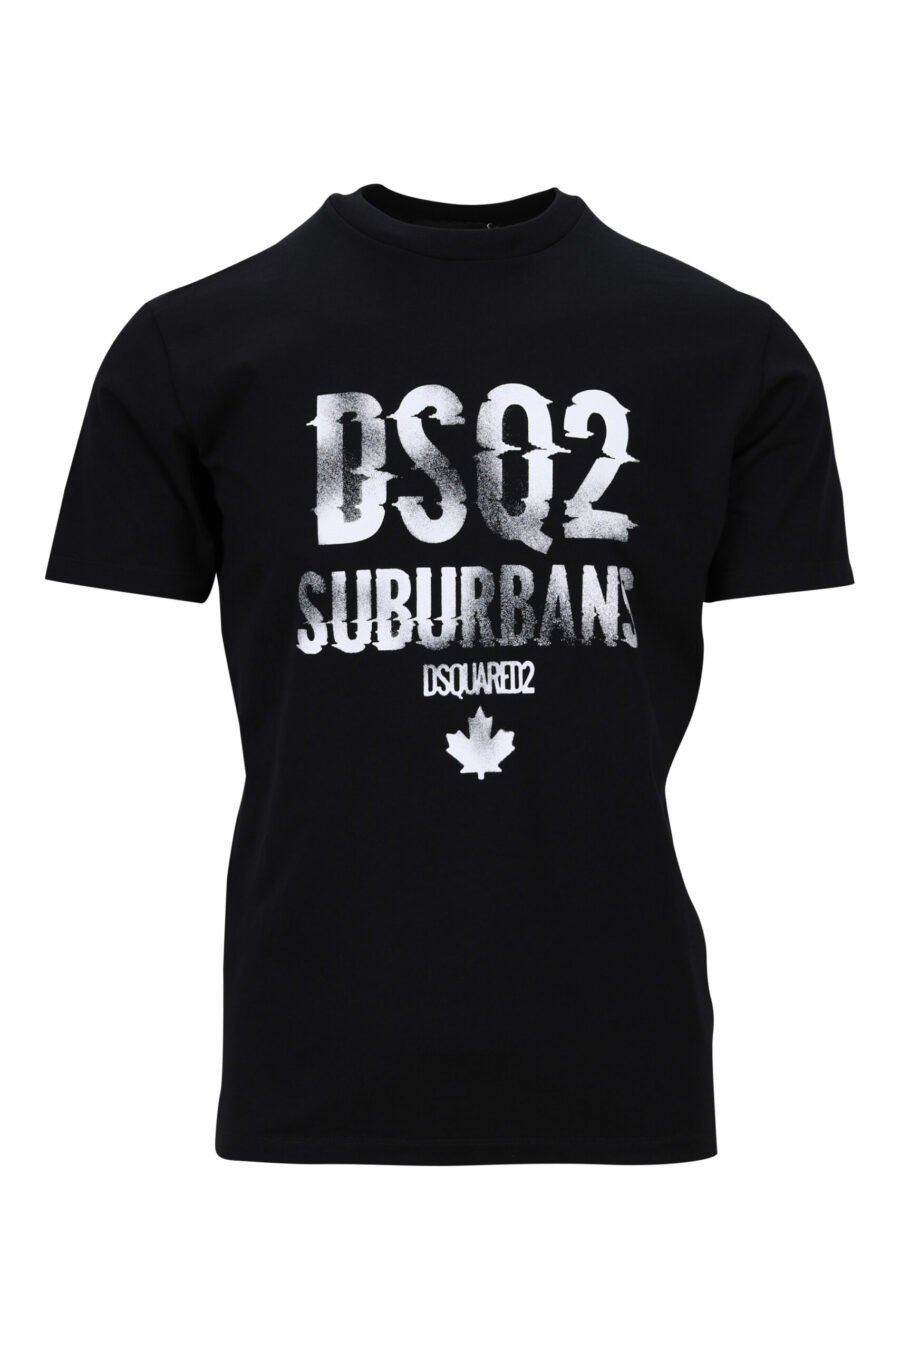 T-shirt noir avec maxilogo "suburbans" blanc - 8054148503932 scaled